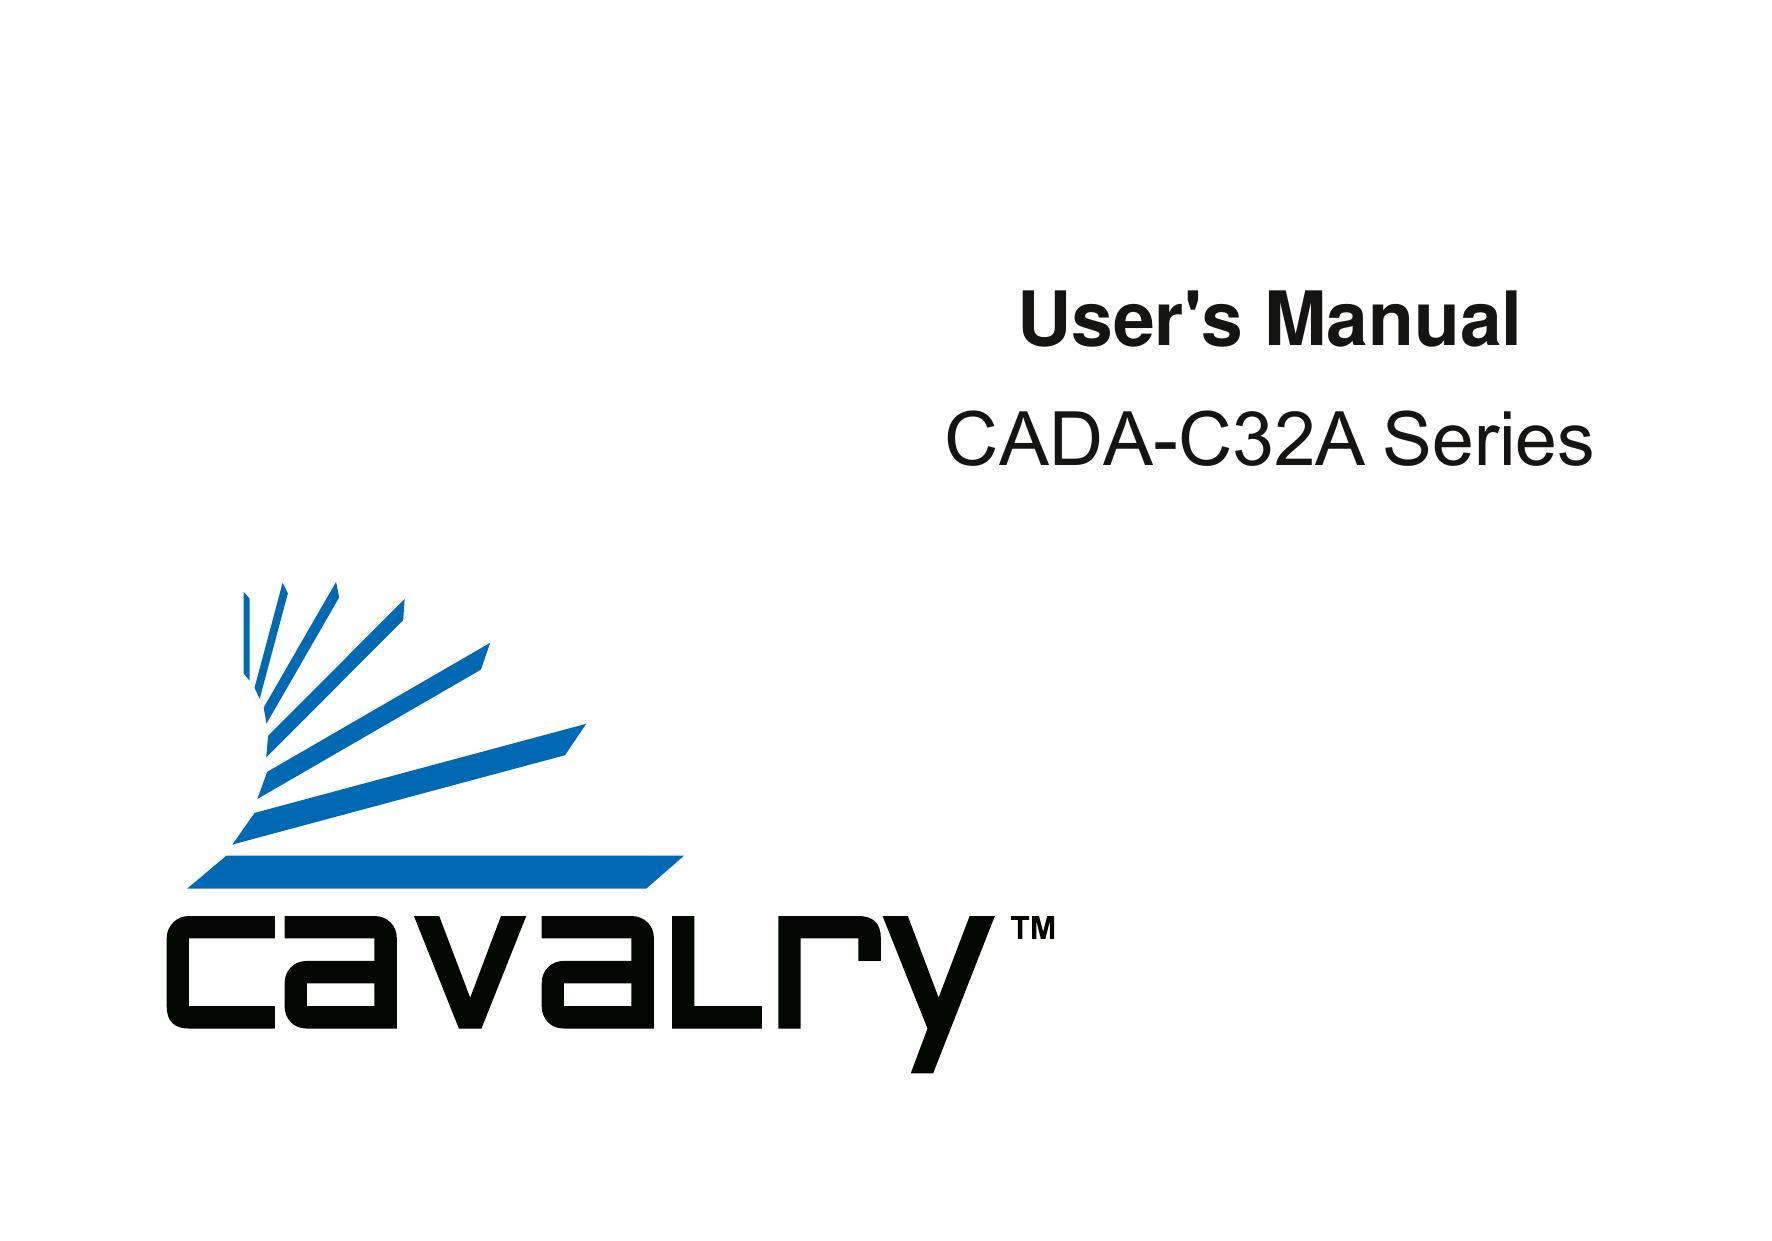 Cavalry Storage CADA-C32A Washer/Dryer User Manual